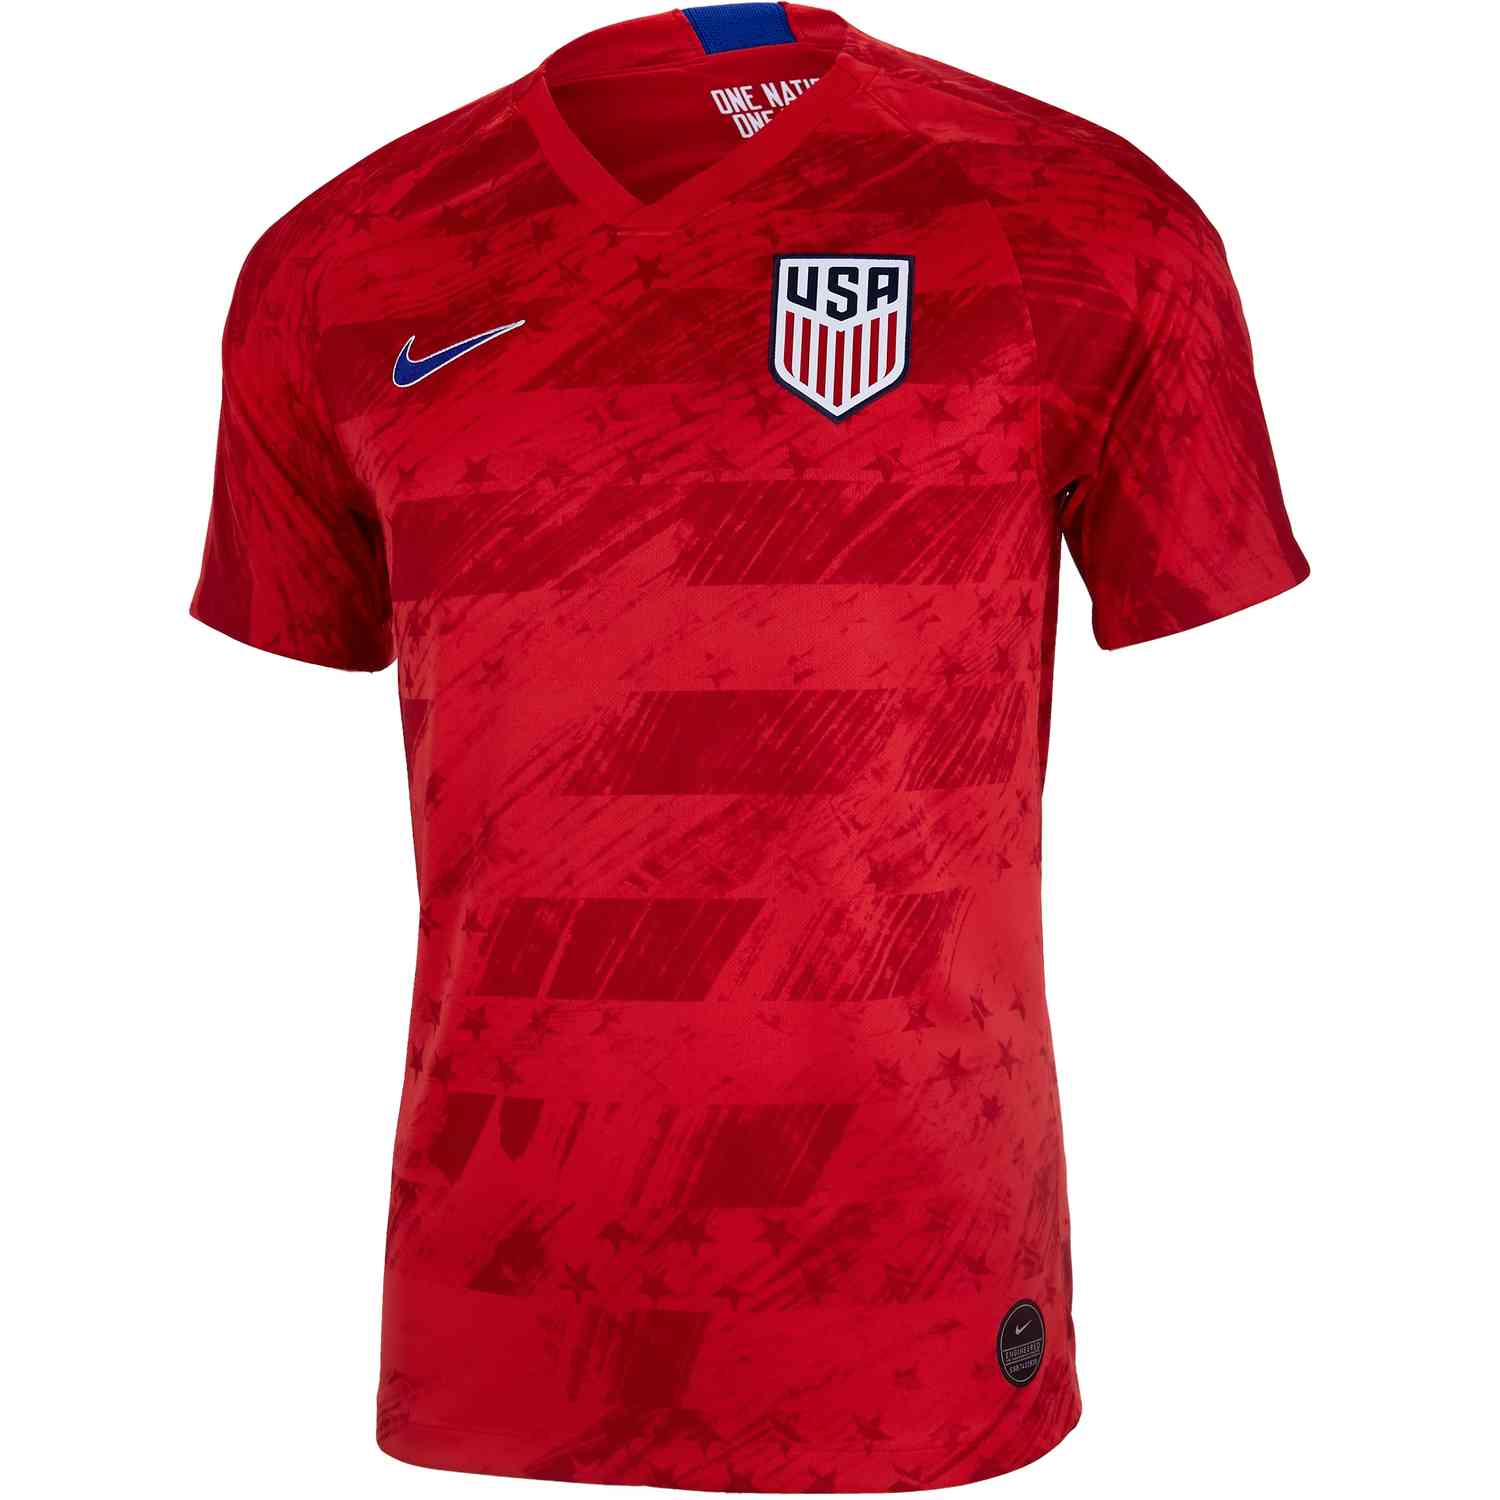 2019 Nike USMNT Away Jersey - SoccerPro